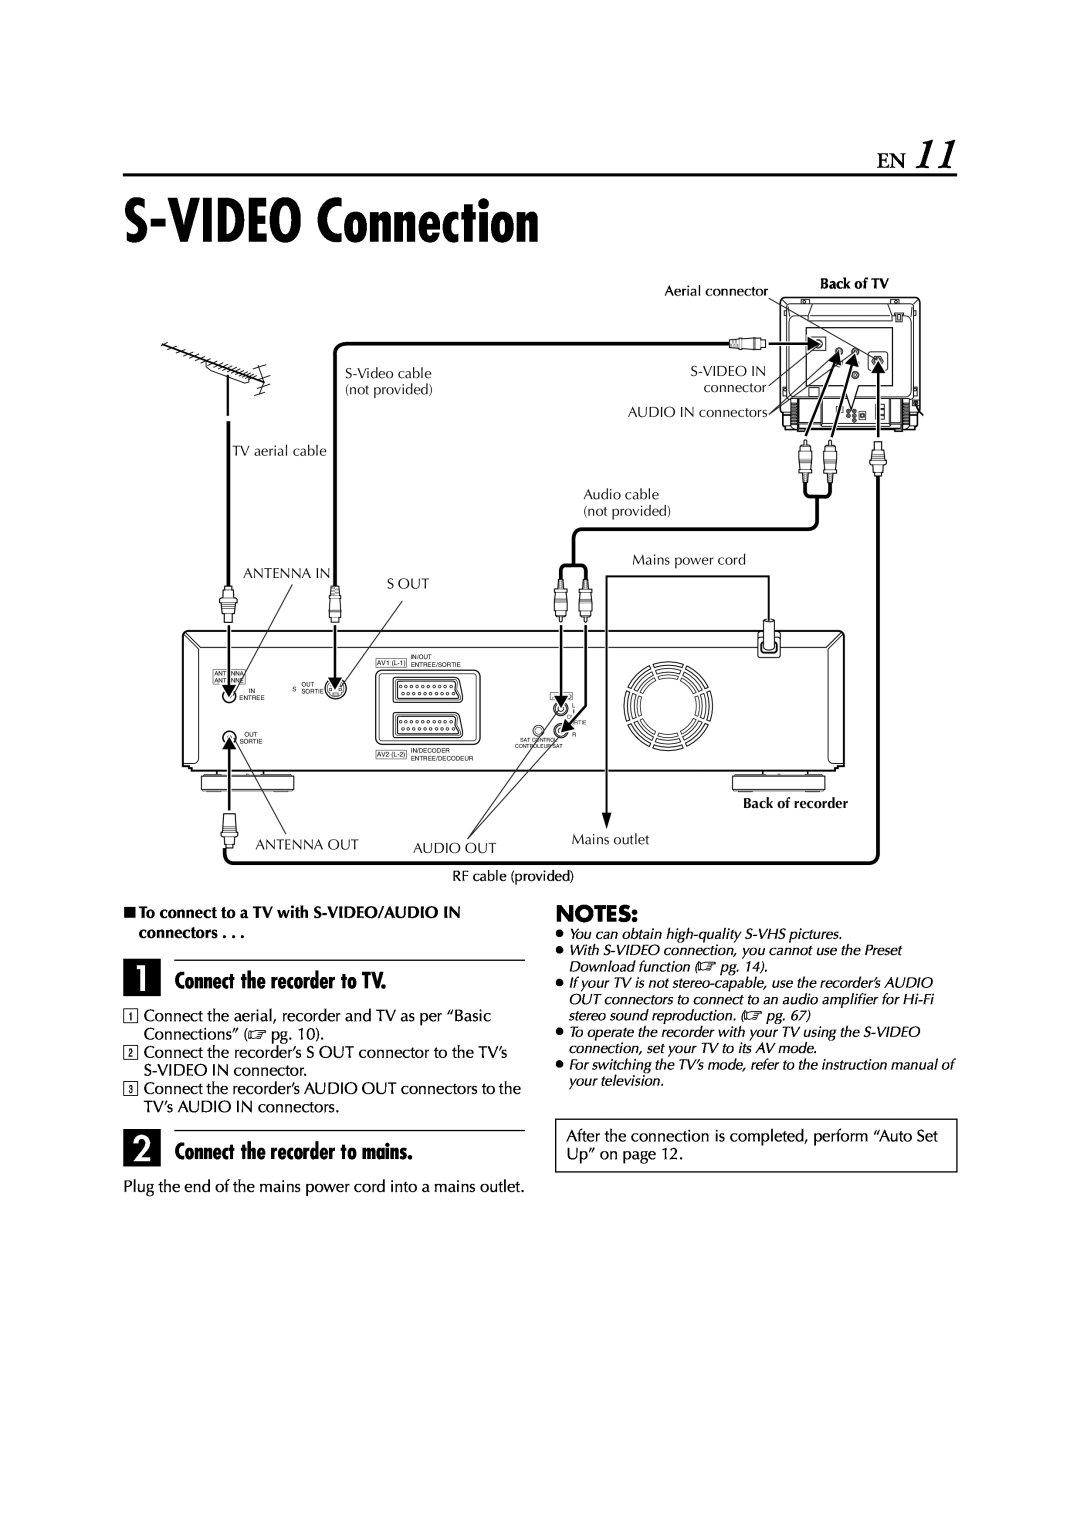 JVC LPT0616-001A S-VIDEO Connection, A Connect the recorder to TV, B Connect the recorder to mains, Aerial connector 